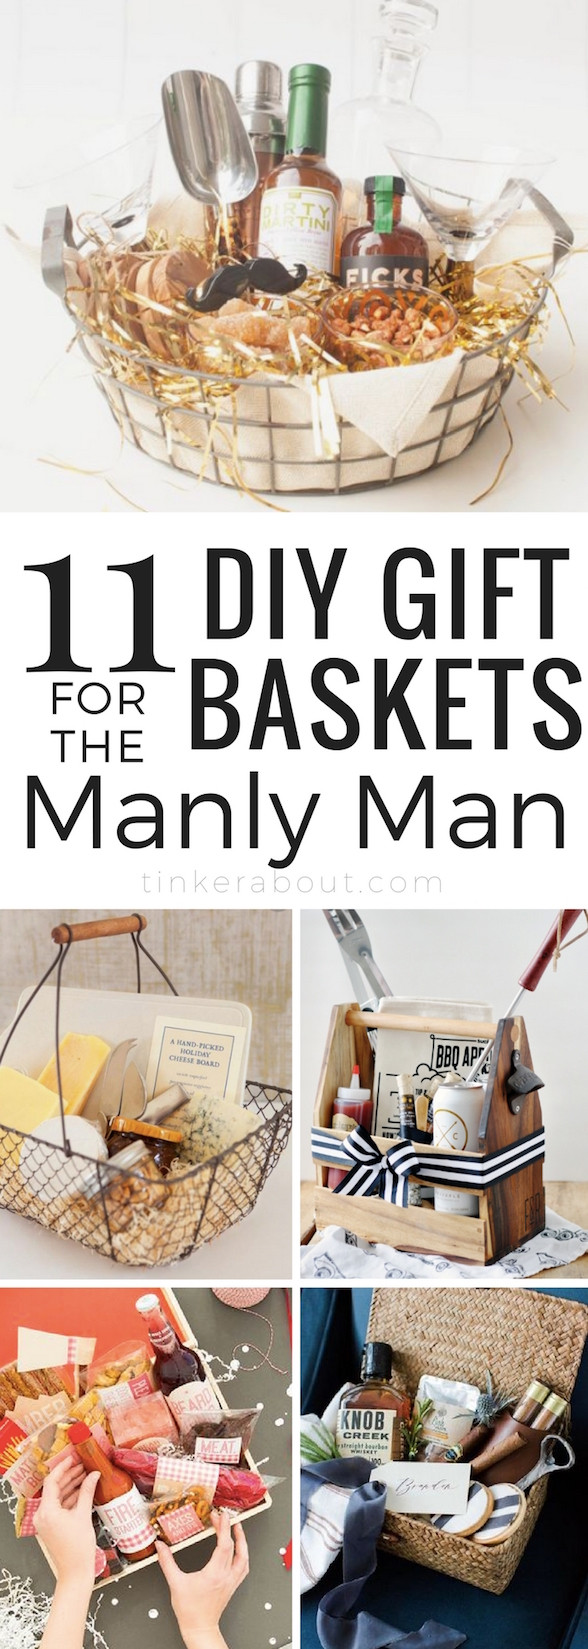 Gift Basket Ideas For Him
 11 Best Gift Basket Ideas For Him